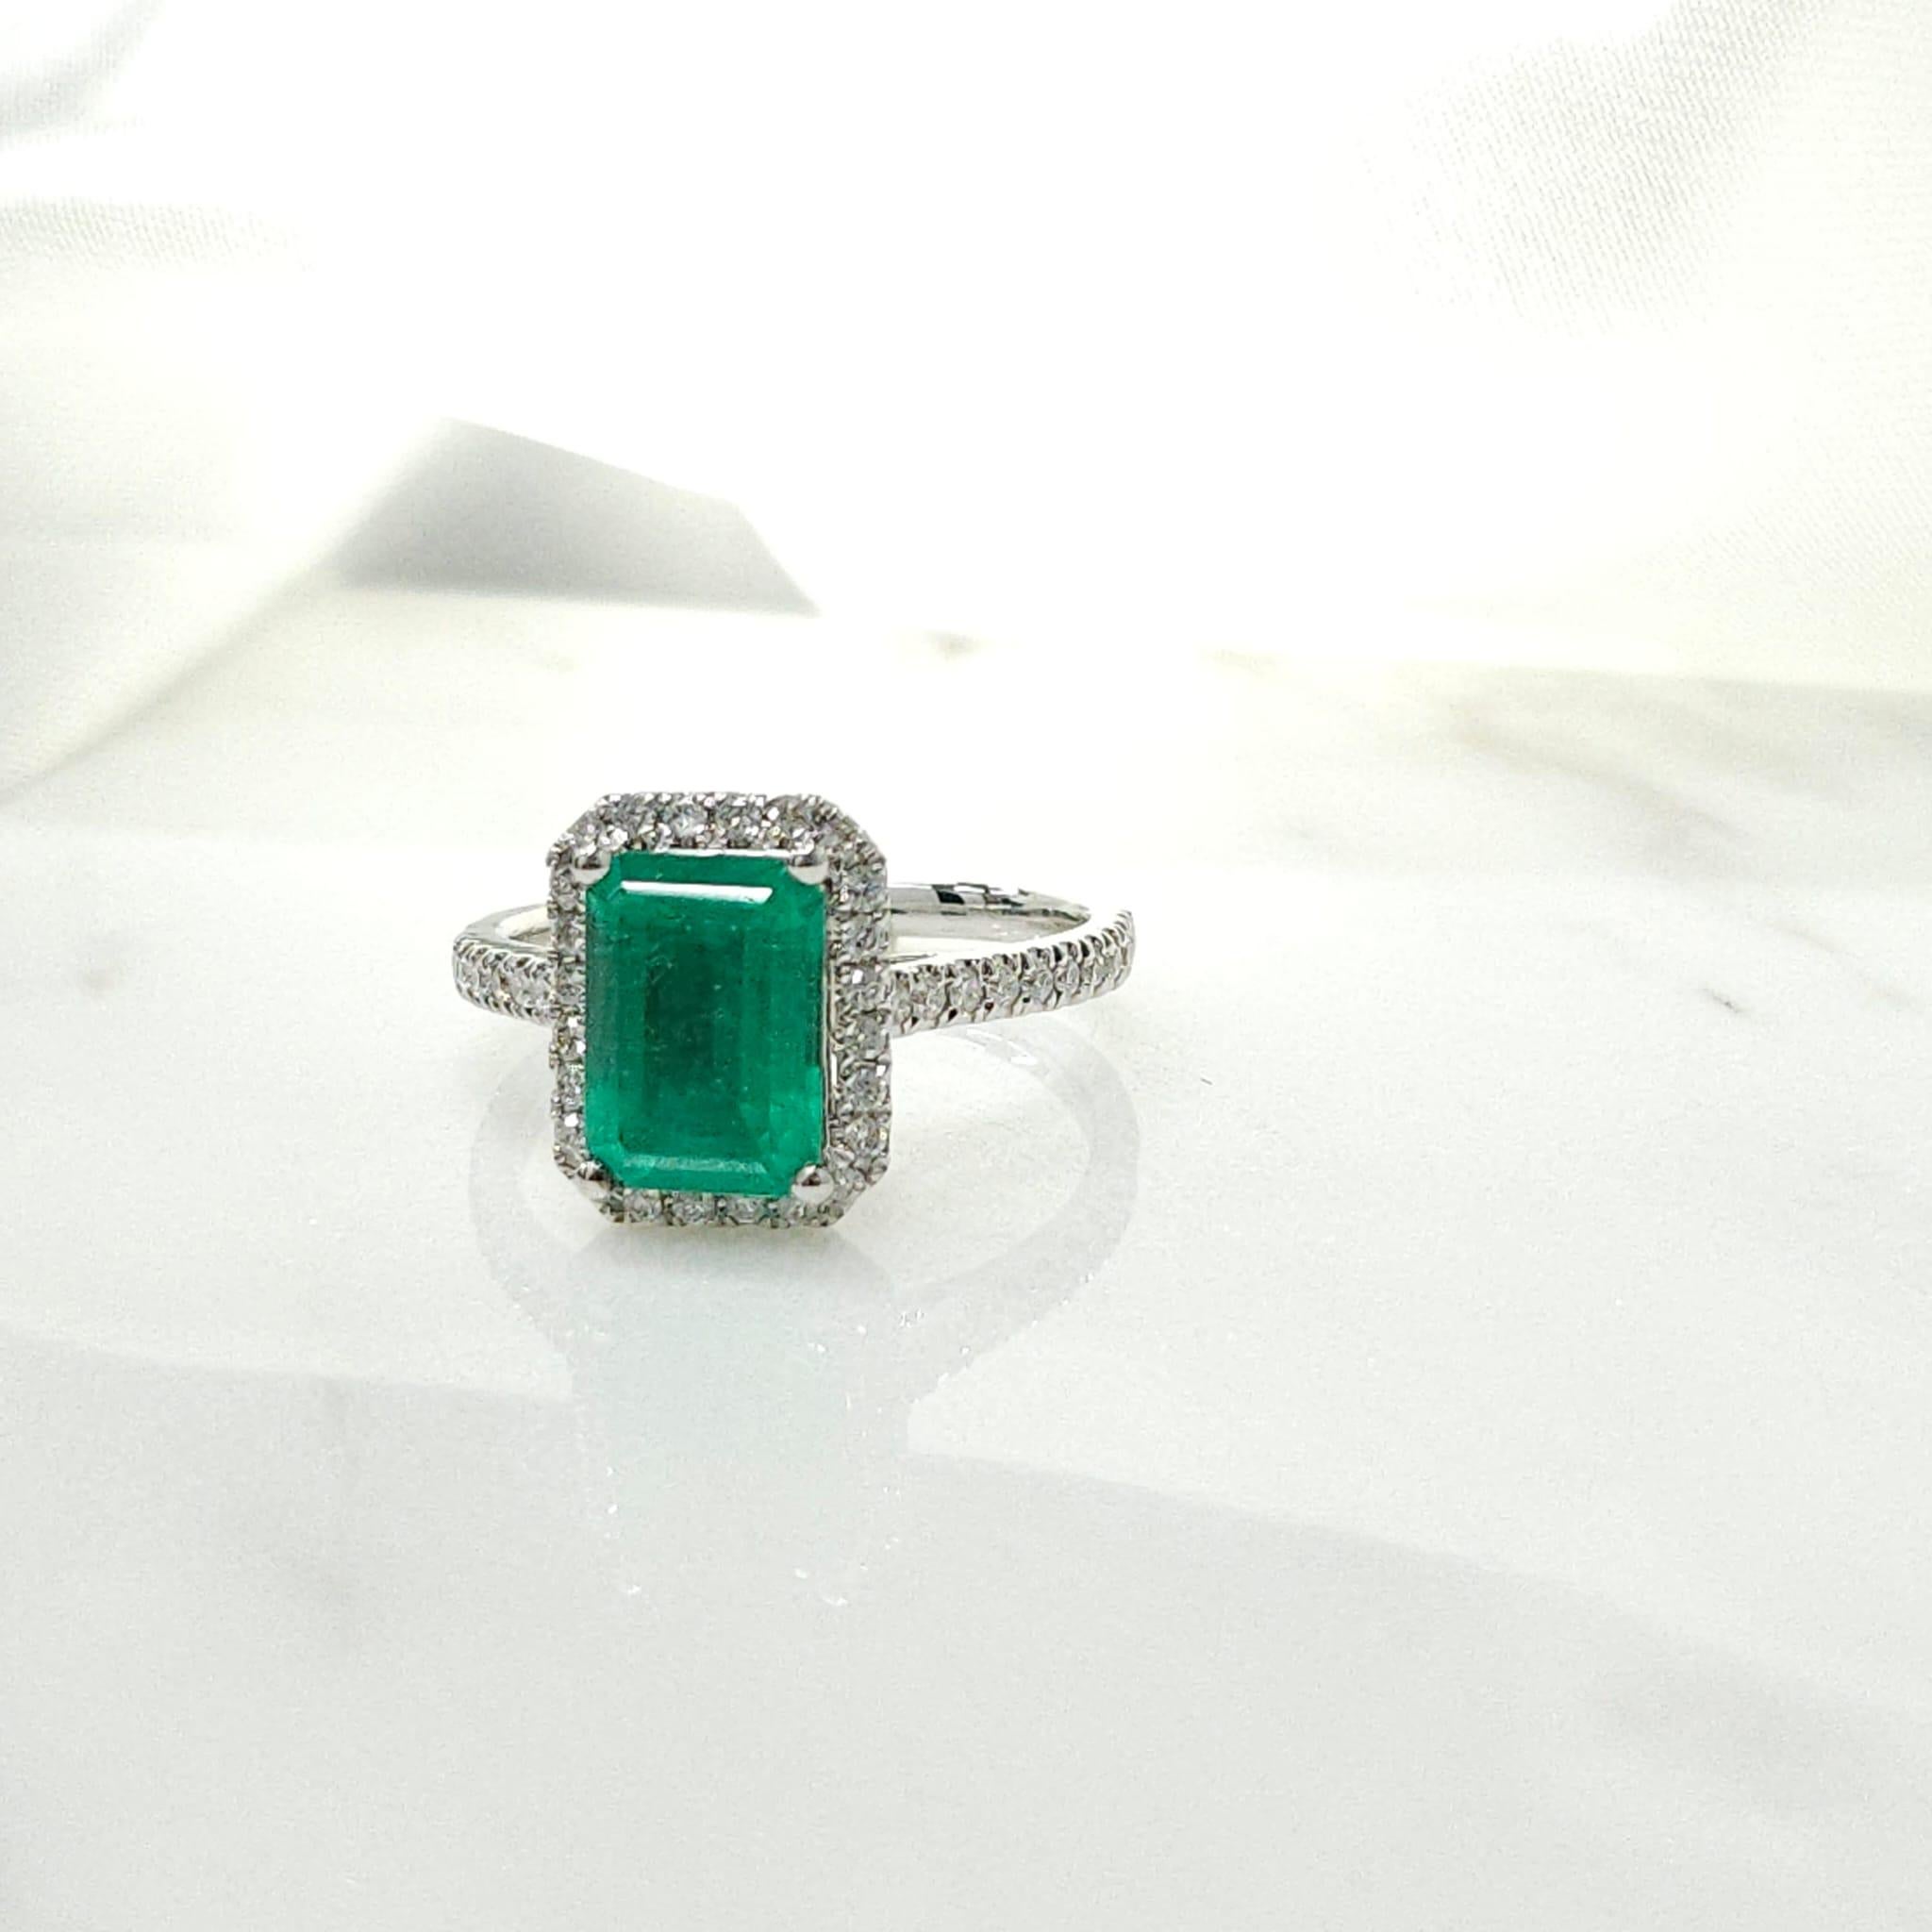 IGI Certified 1.76 Carat Emerald & Diamond Ring in 18K White Gold For Sale 2